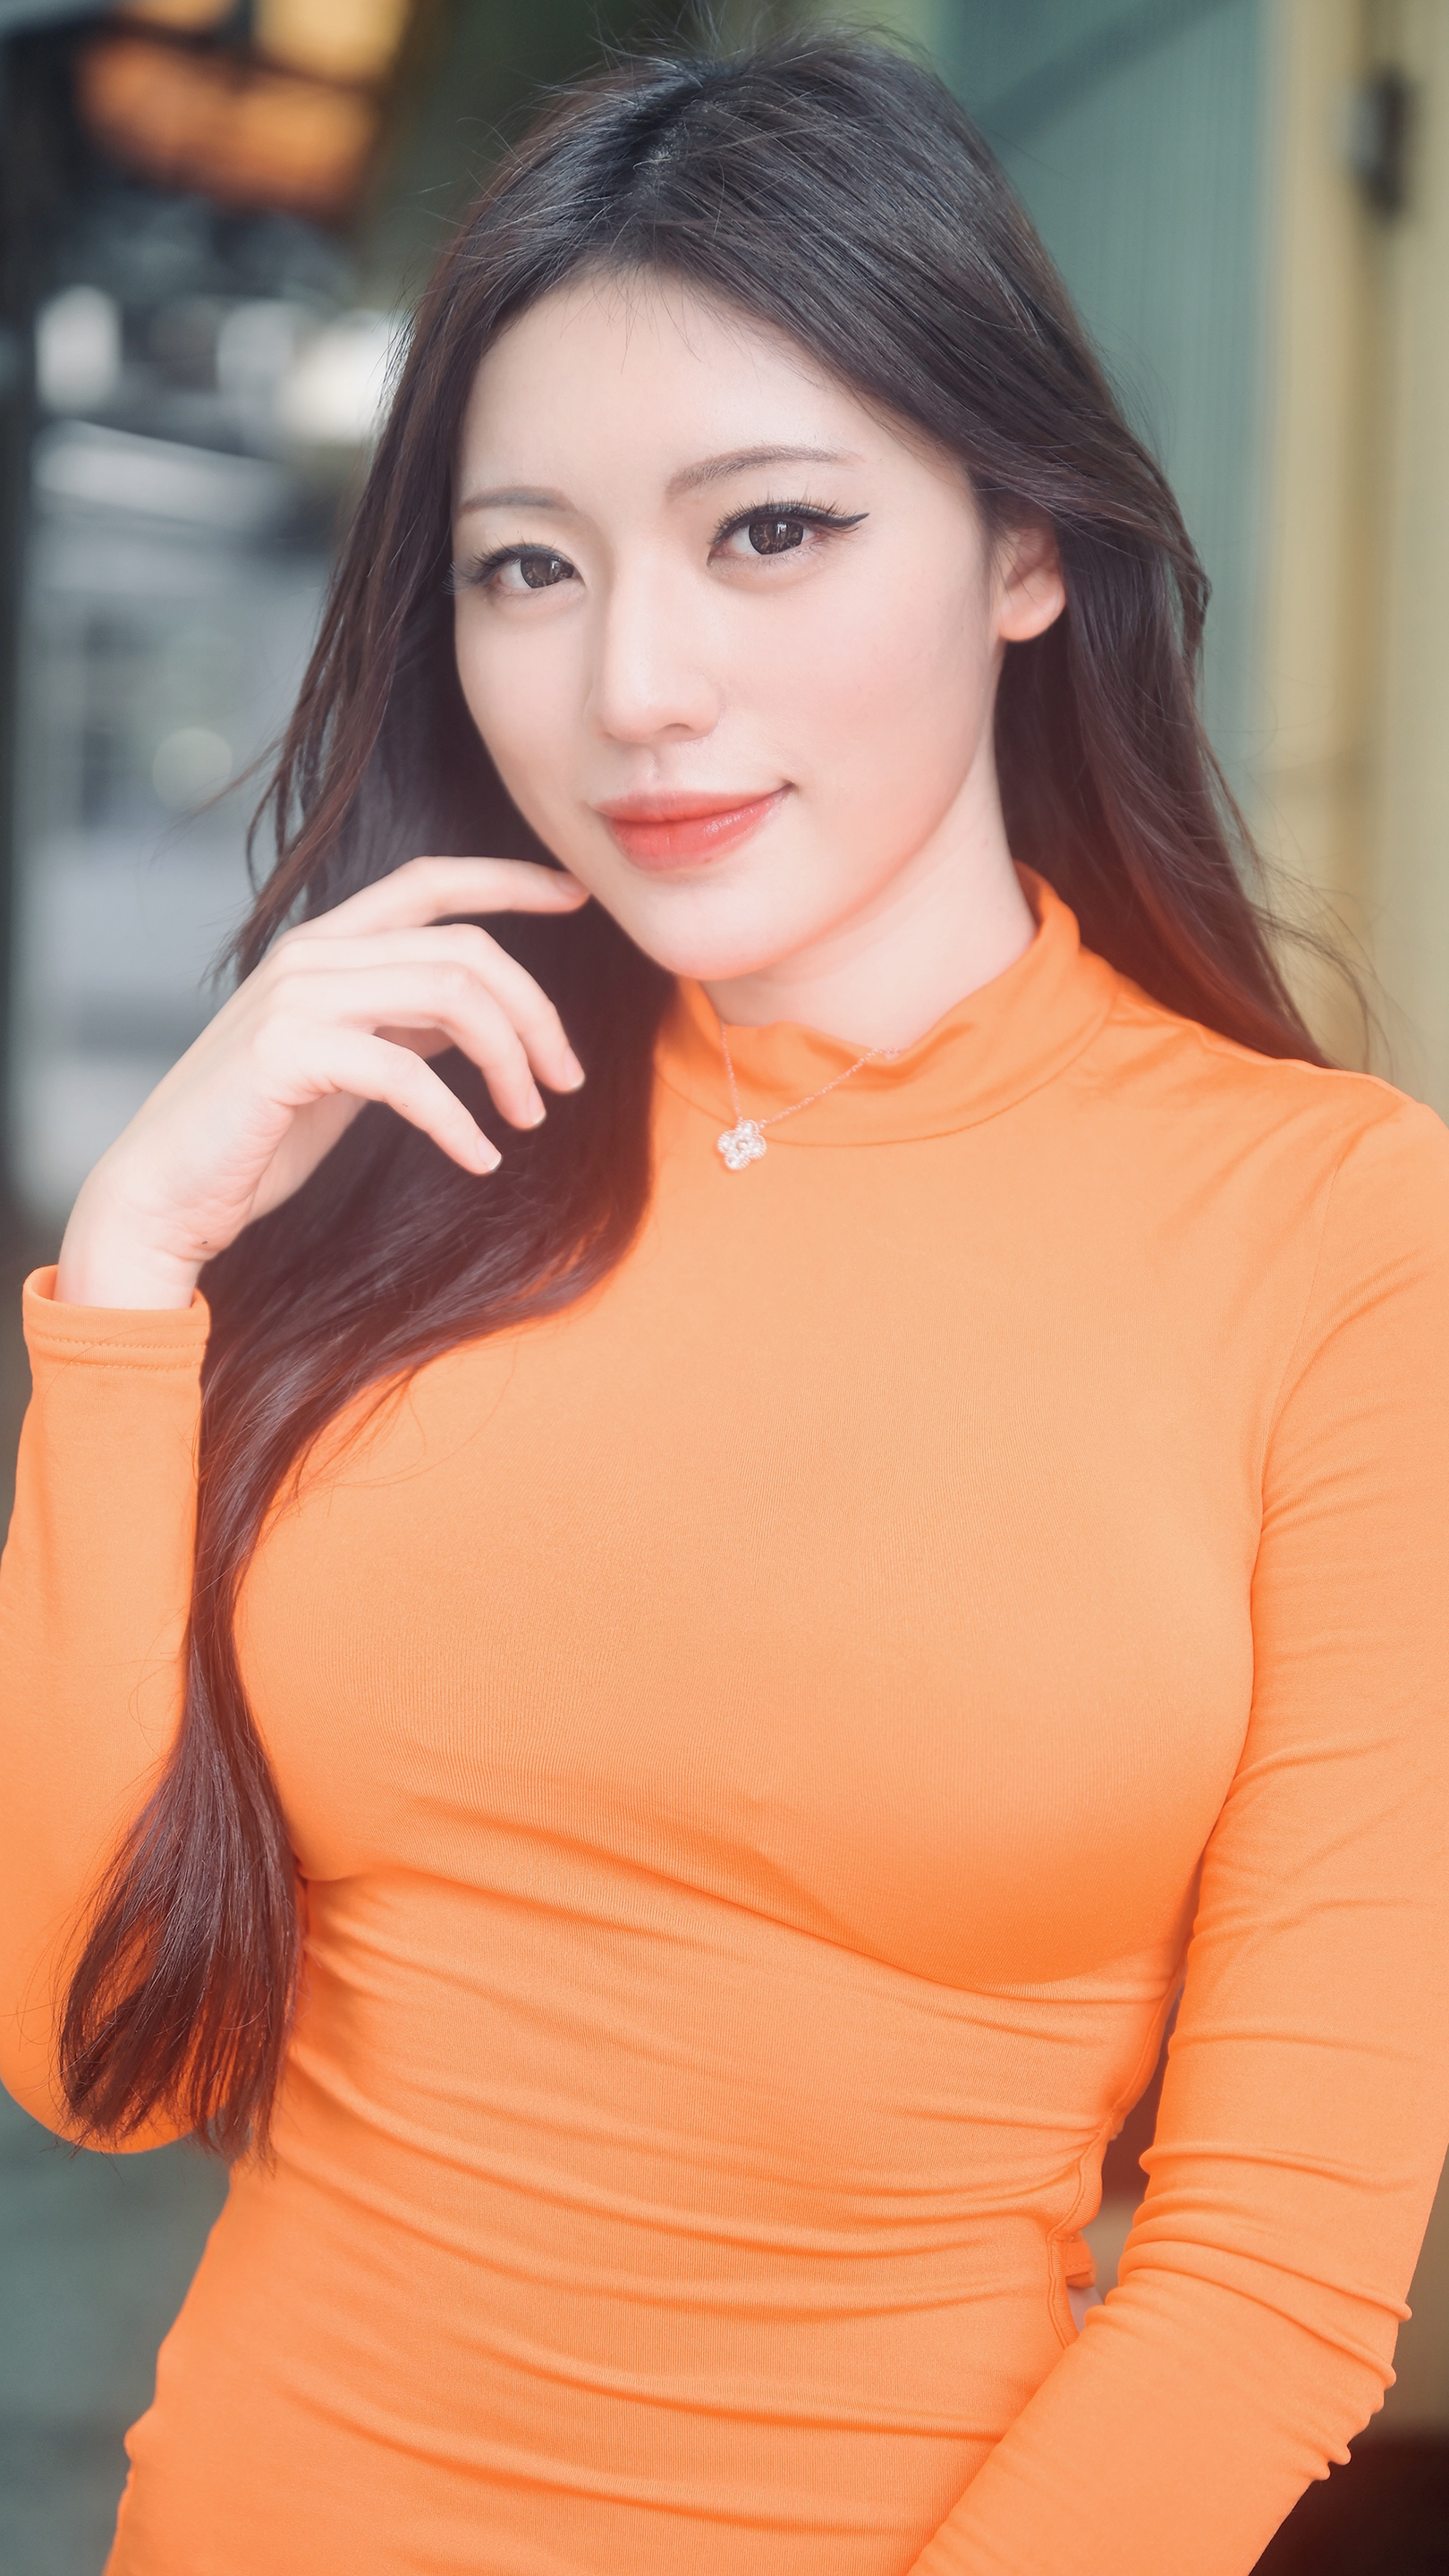 Asian Women Model Orange Dress Long Hair Brunette Looking At Viewer Portrait Display Women Outdoors 1620x2880